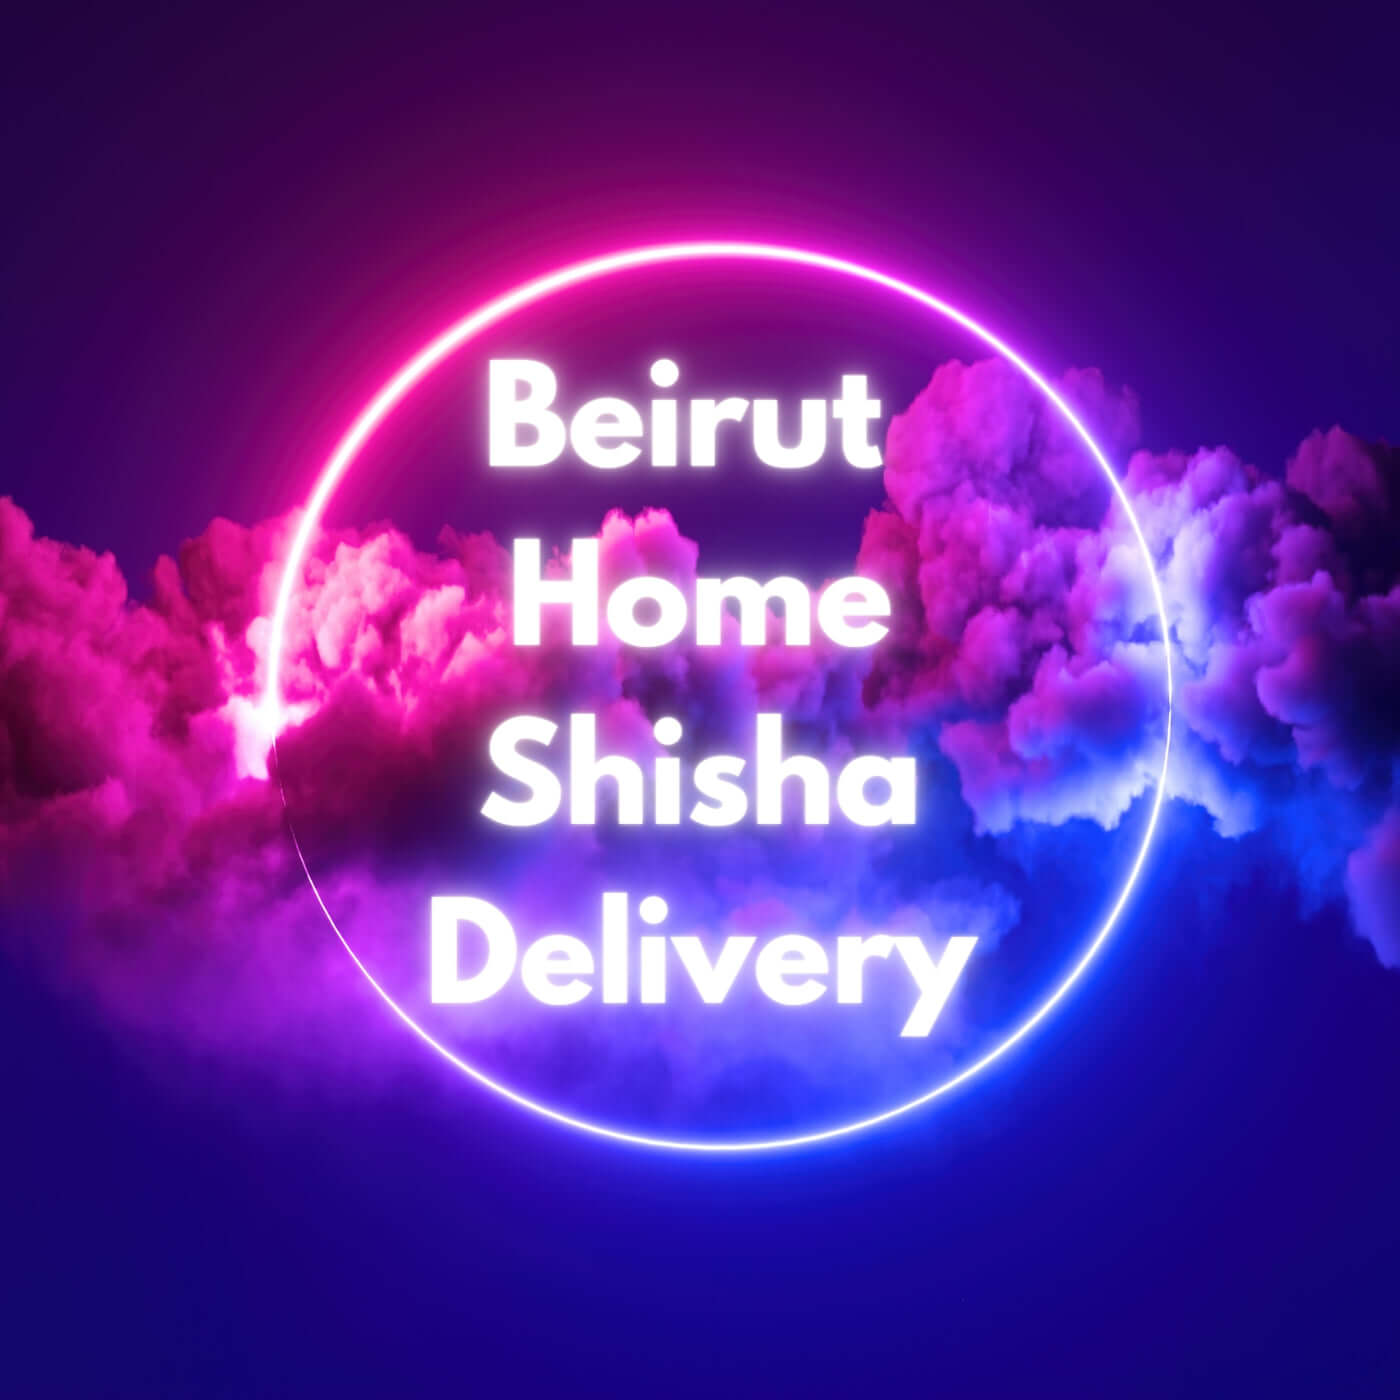 Beirut Shisha Home Delivery UAE - Shisha Home Delivery In Dubai - UAE